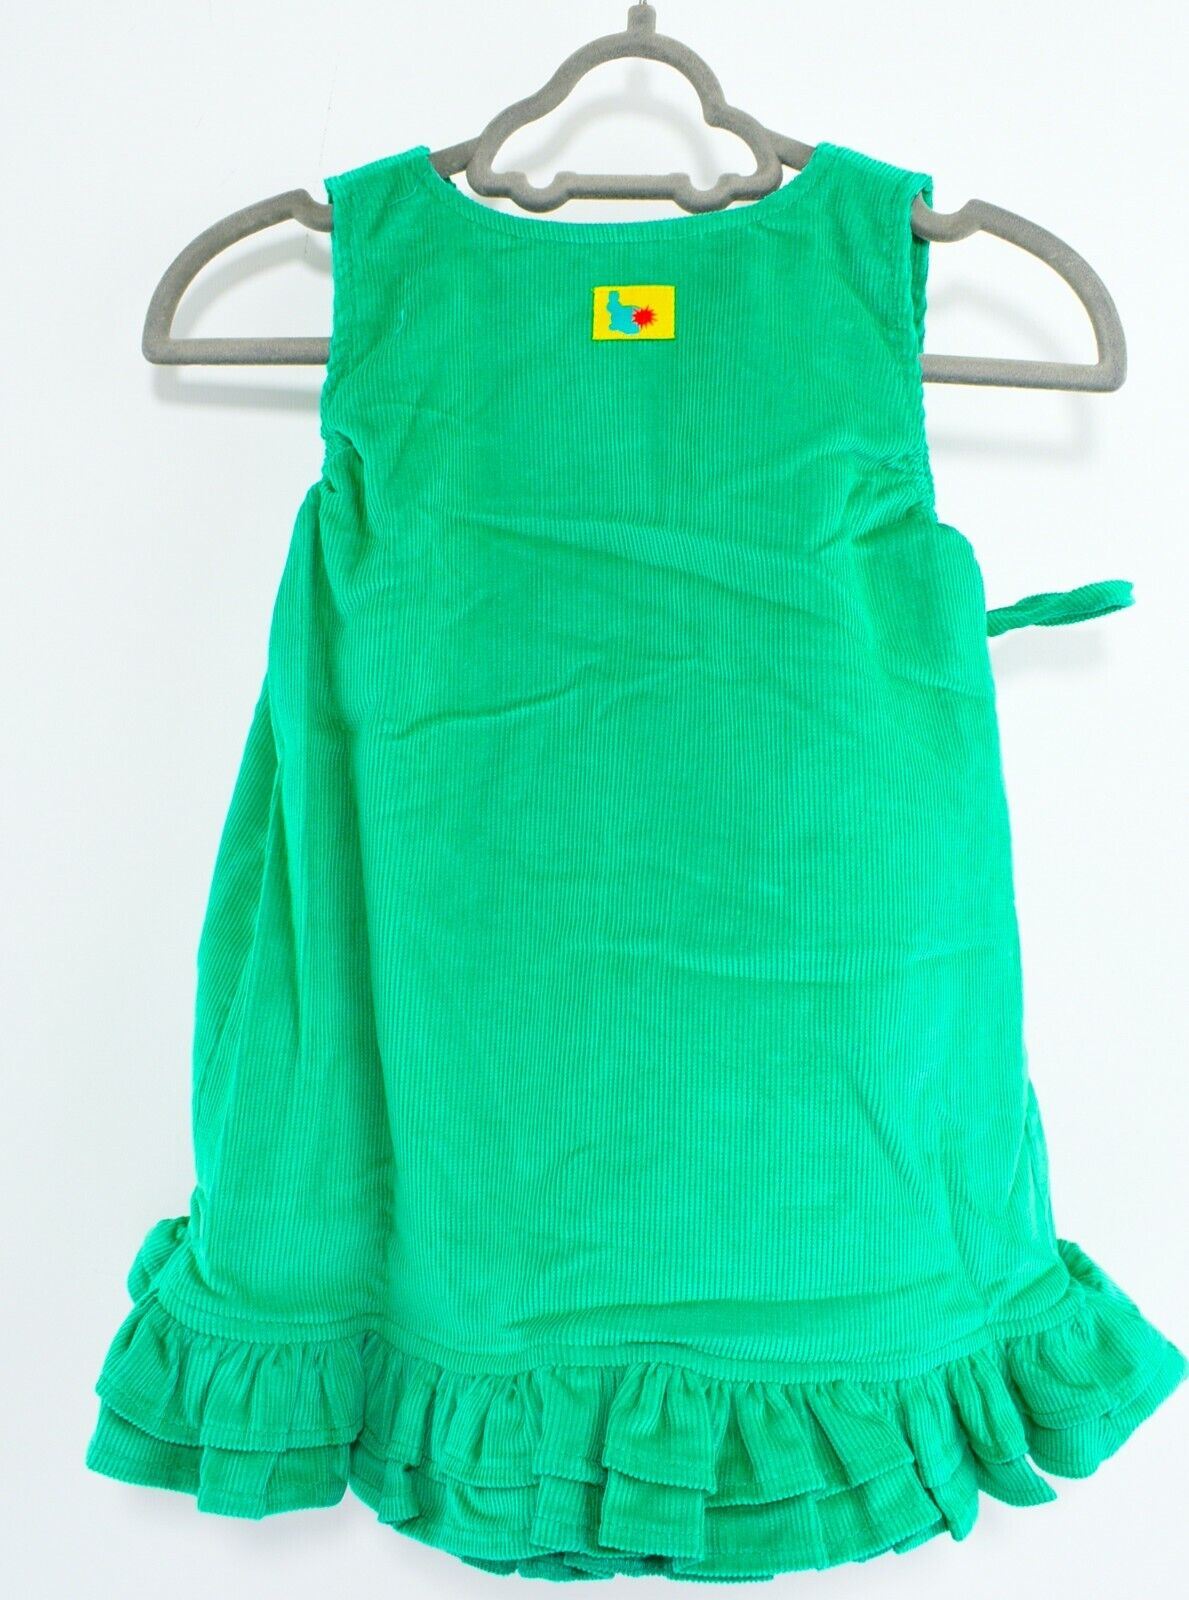 GREEN RABBIT Baby Girls' Fine Corduroy Dress, Green, MADE IN UK, size 0-6 Months